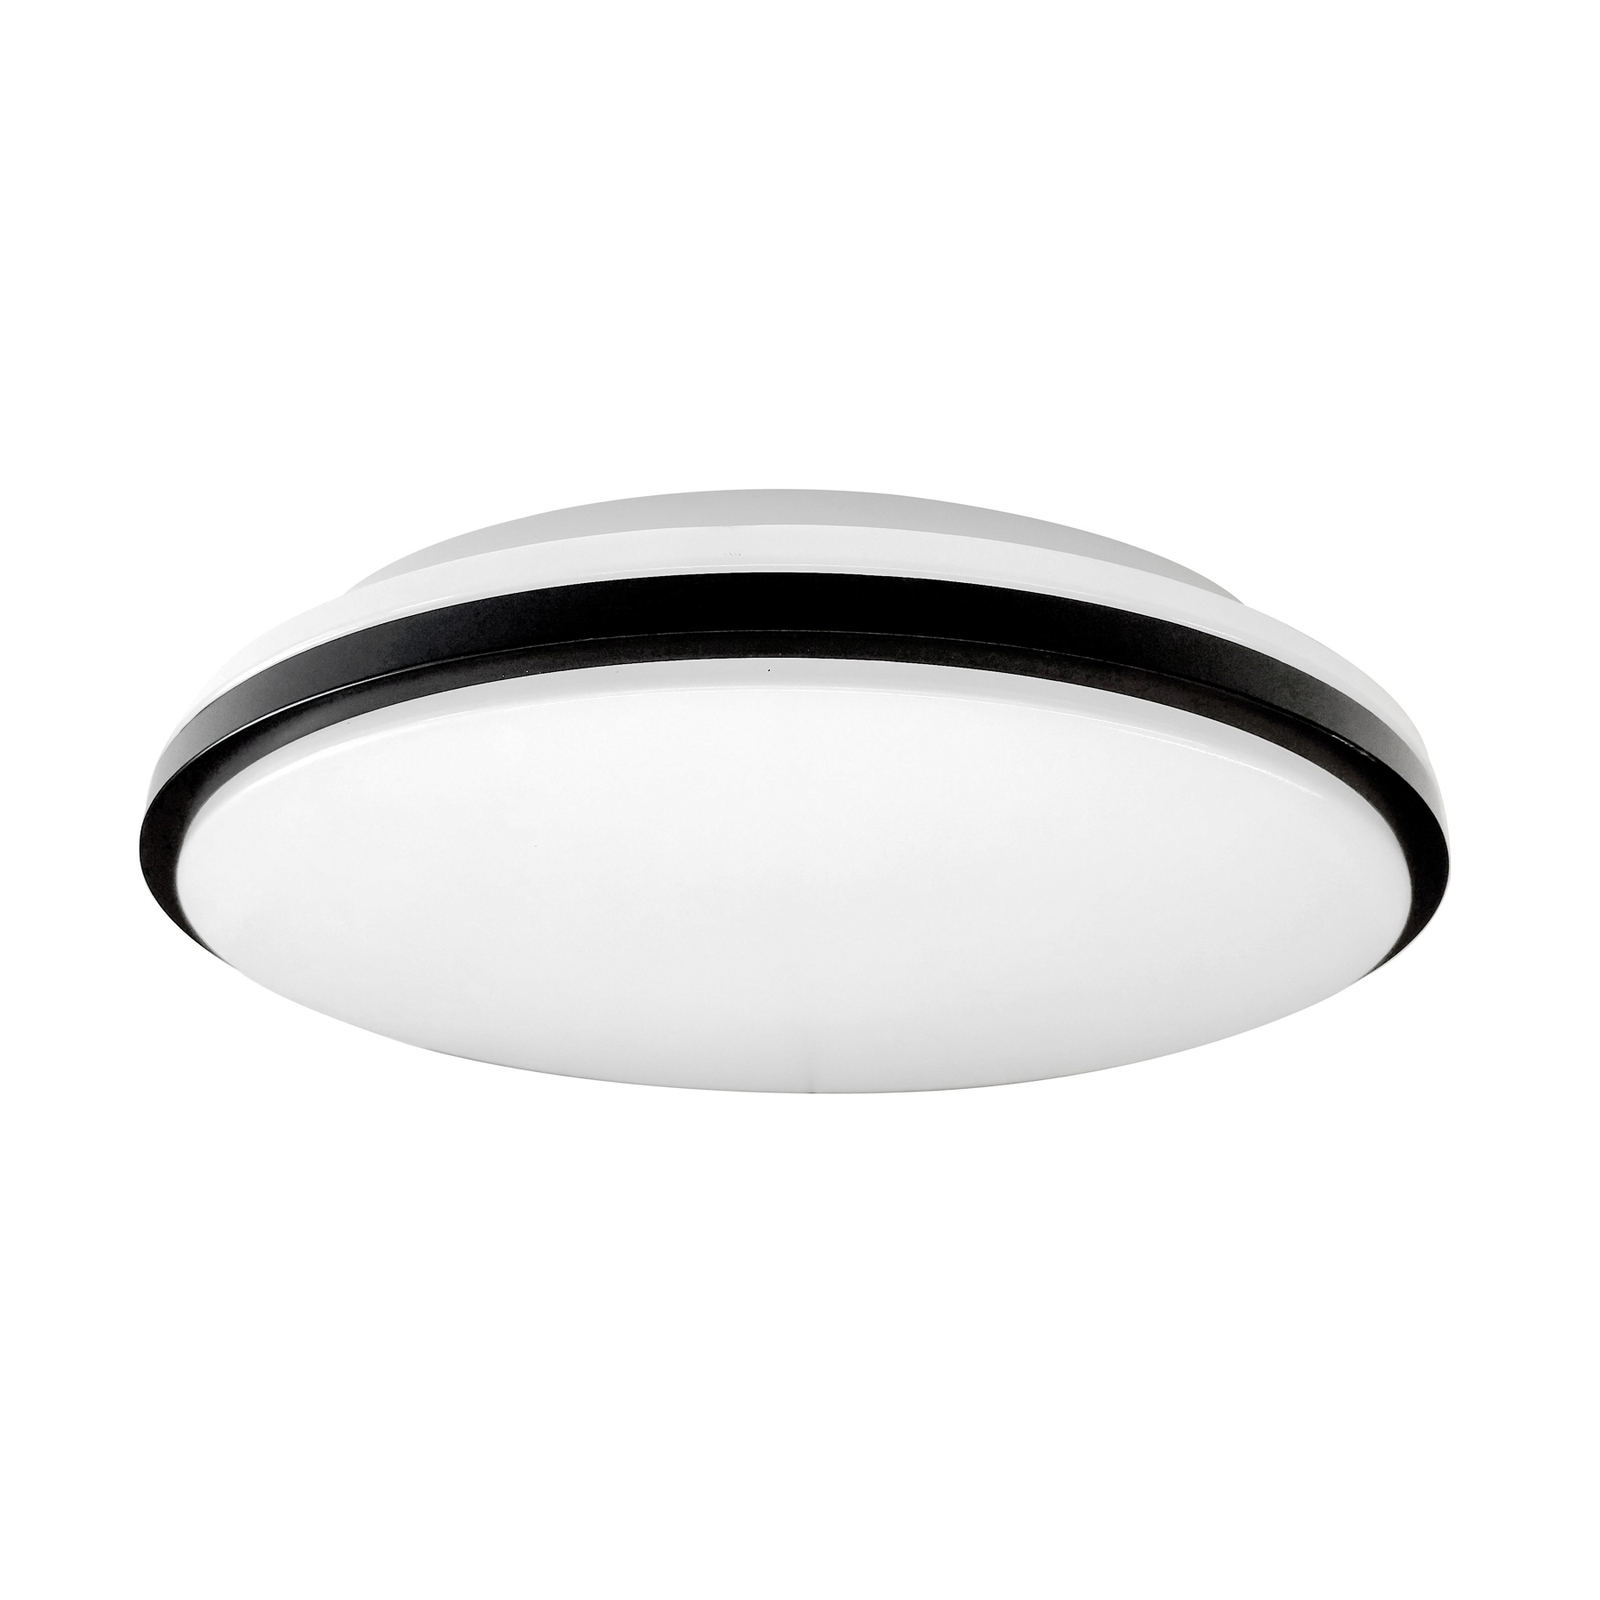 Müller Licht Taro Round plafonnier LED RVB+CCT